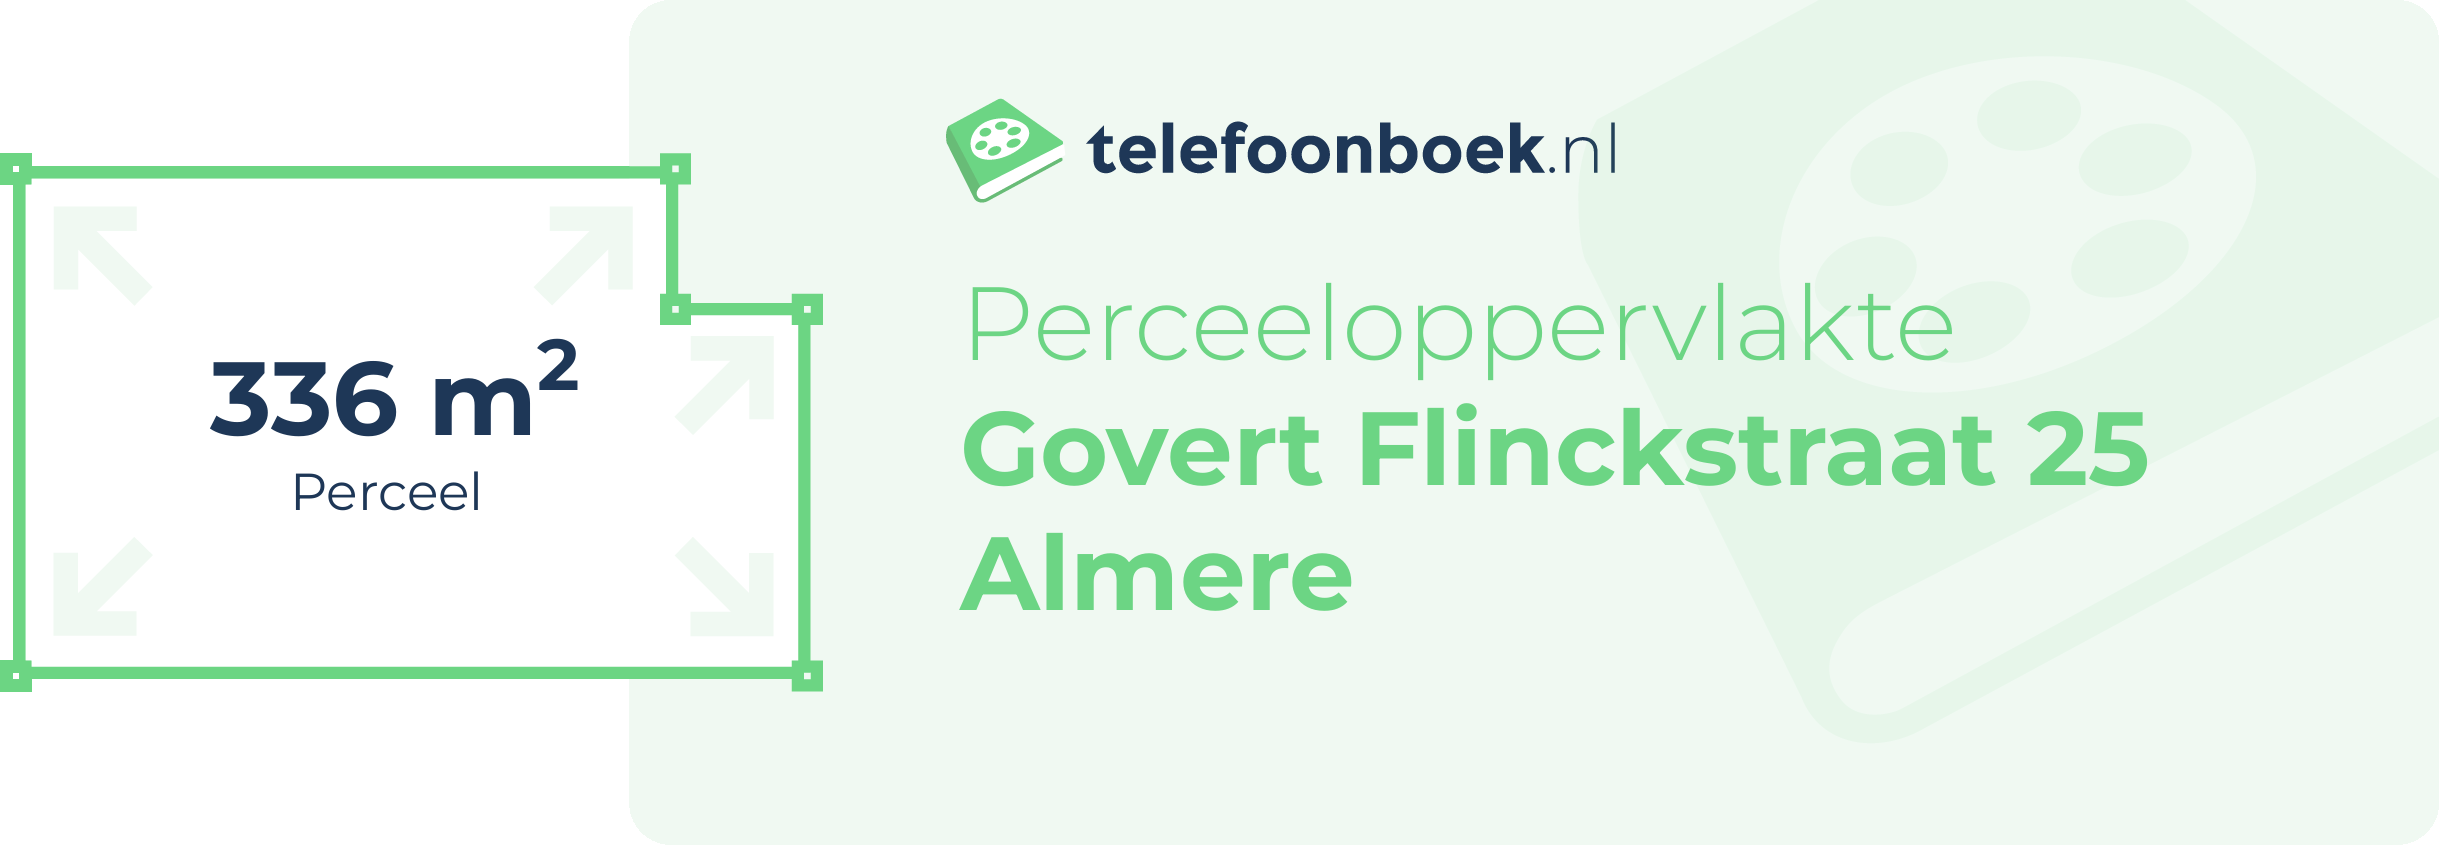 Perceeloppervlakte Govert Flinckstraat 25 Almere